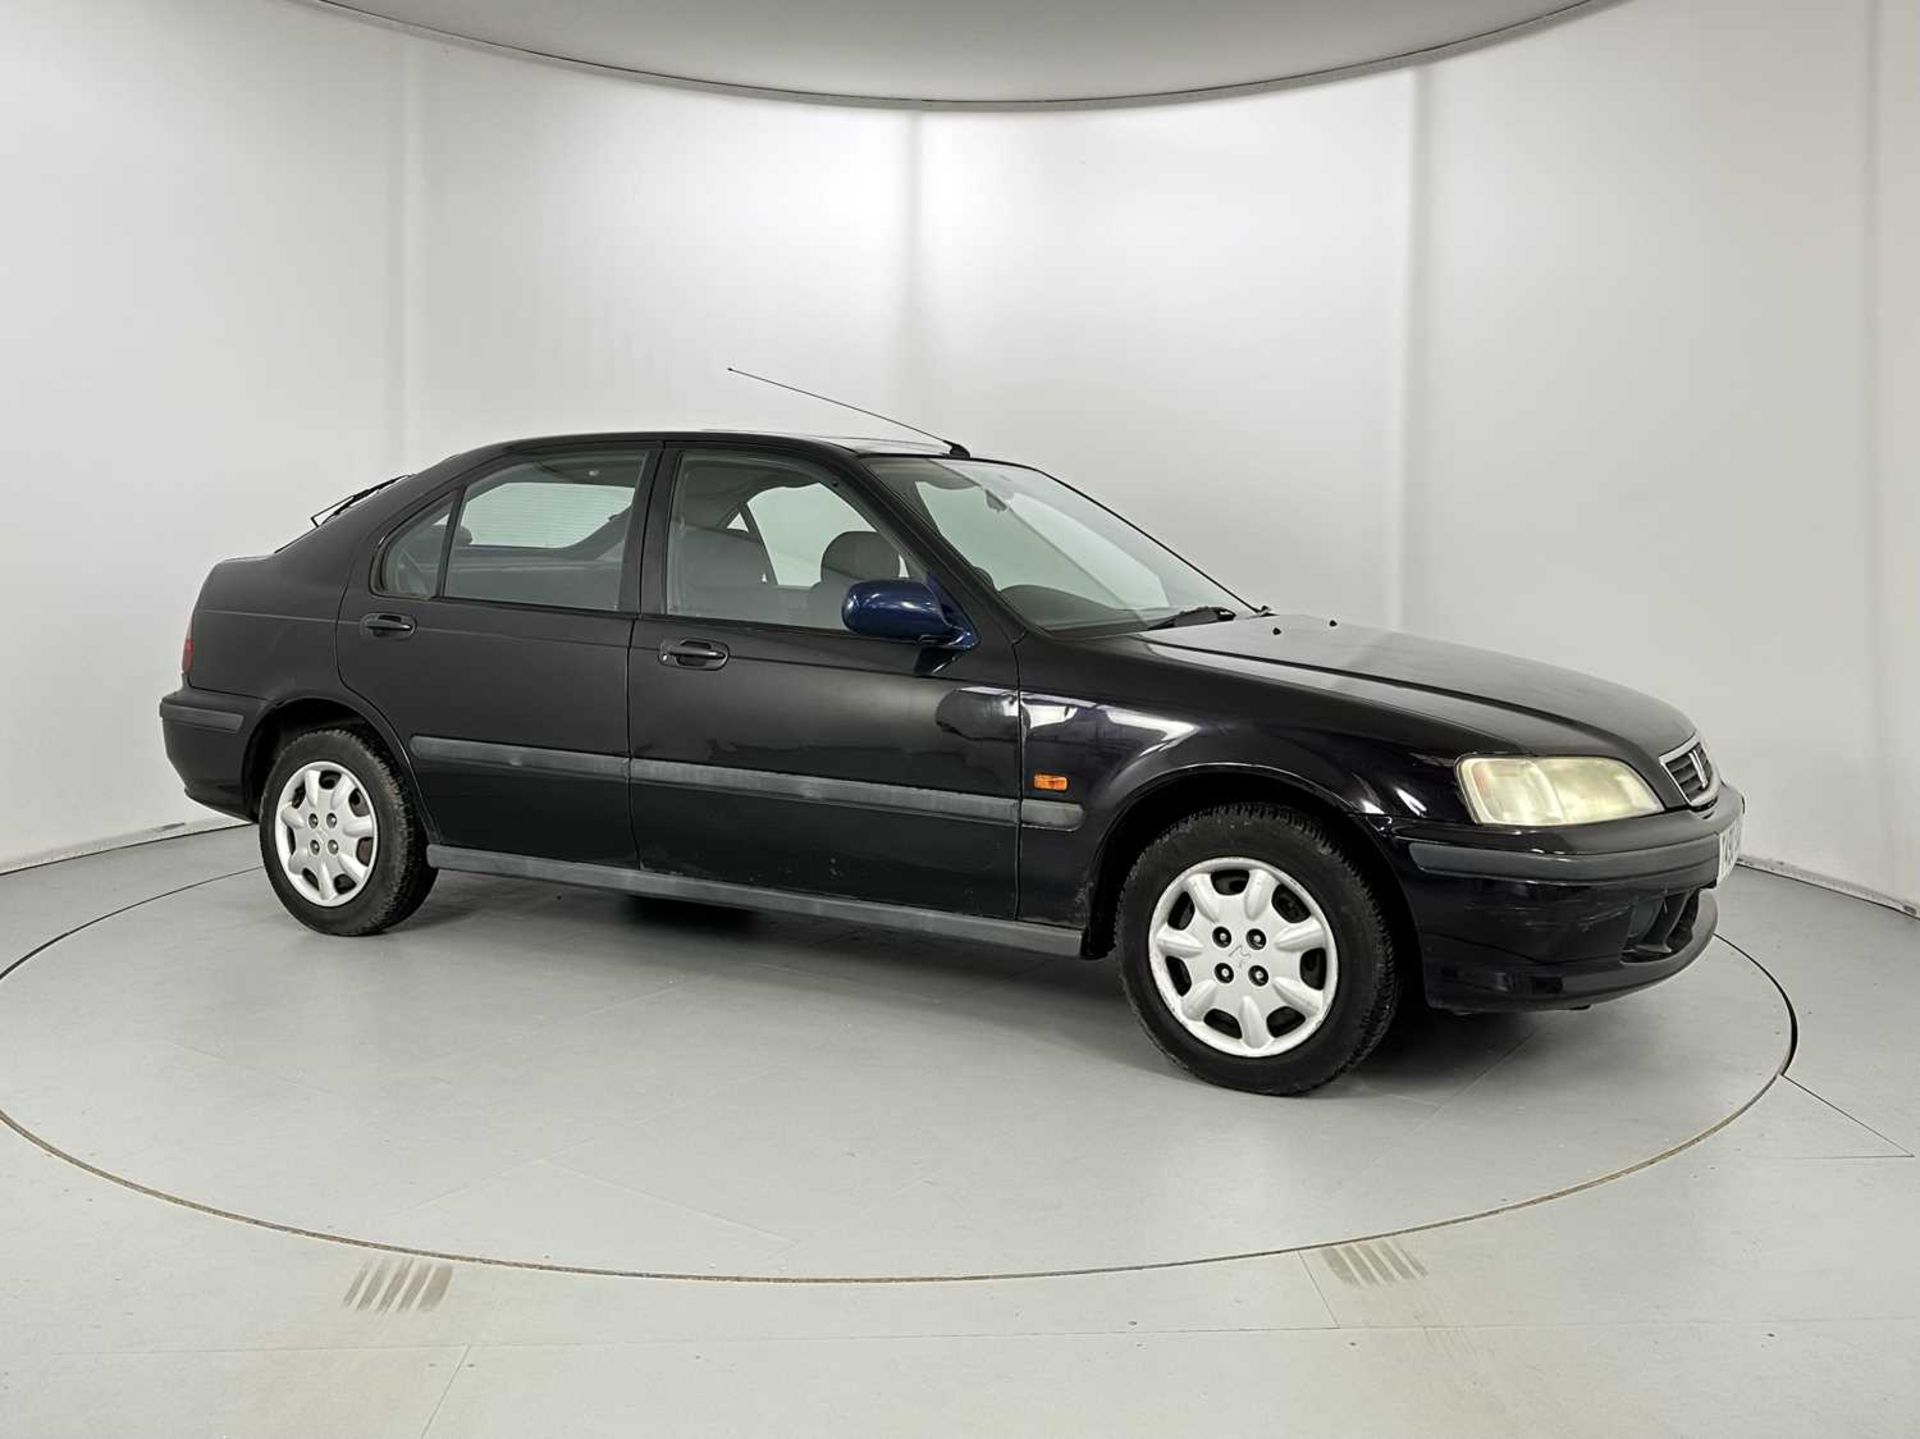 1999 Honda Civic - Image 12 of 34